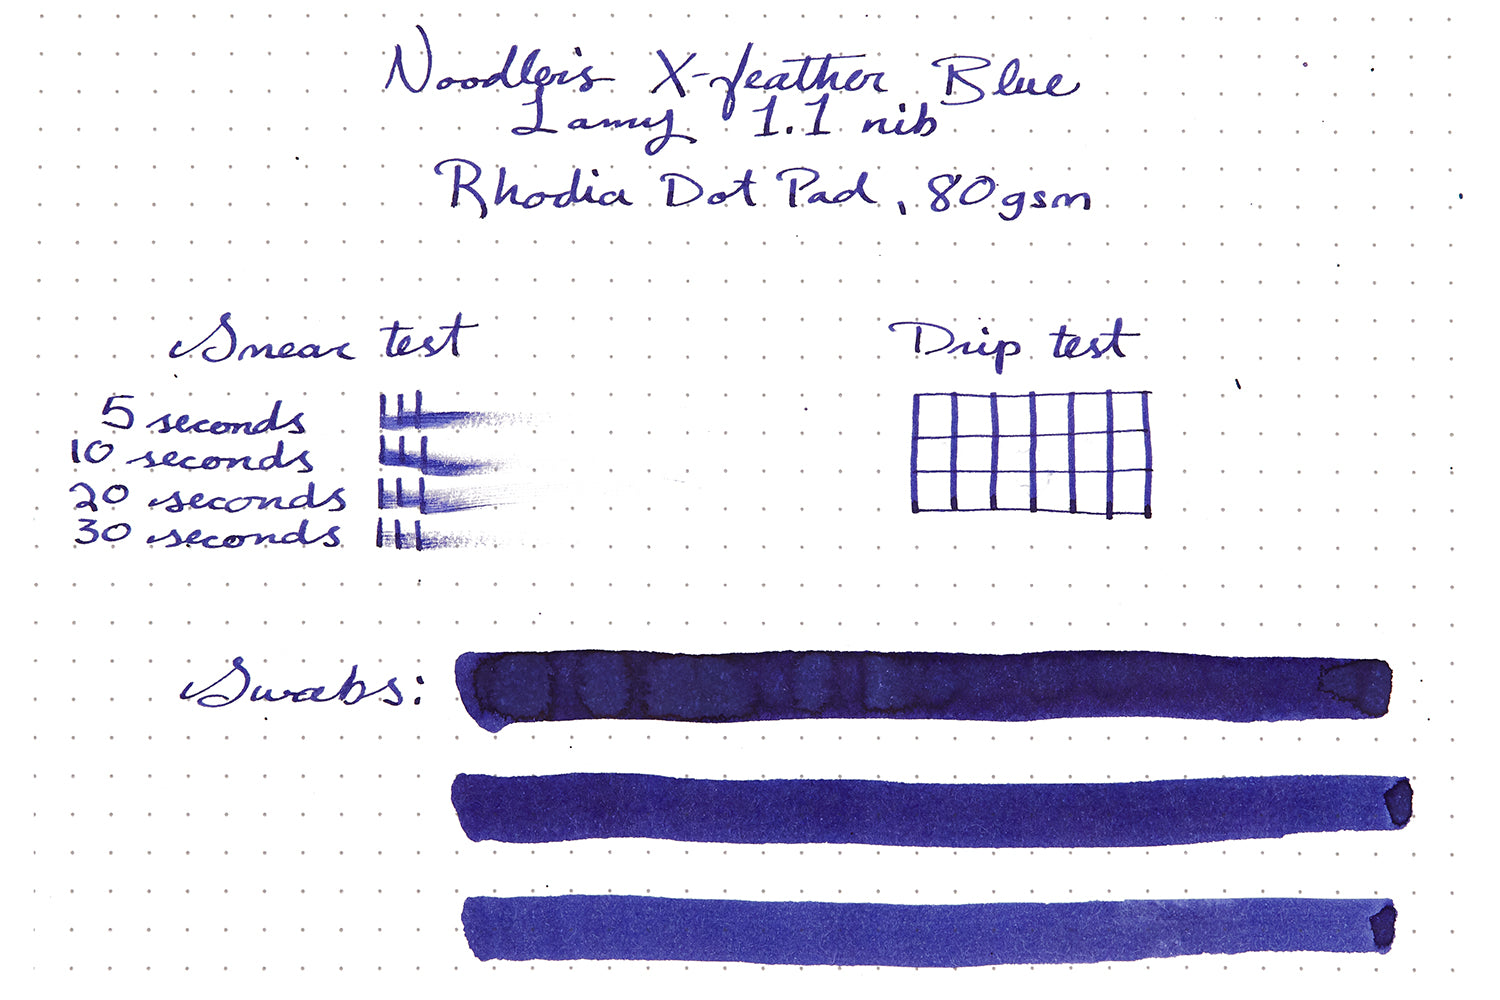 Noodler's X-Feather Blue Bottled Fountain Pen Ink - 3oz Bottle